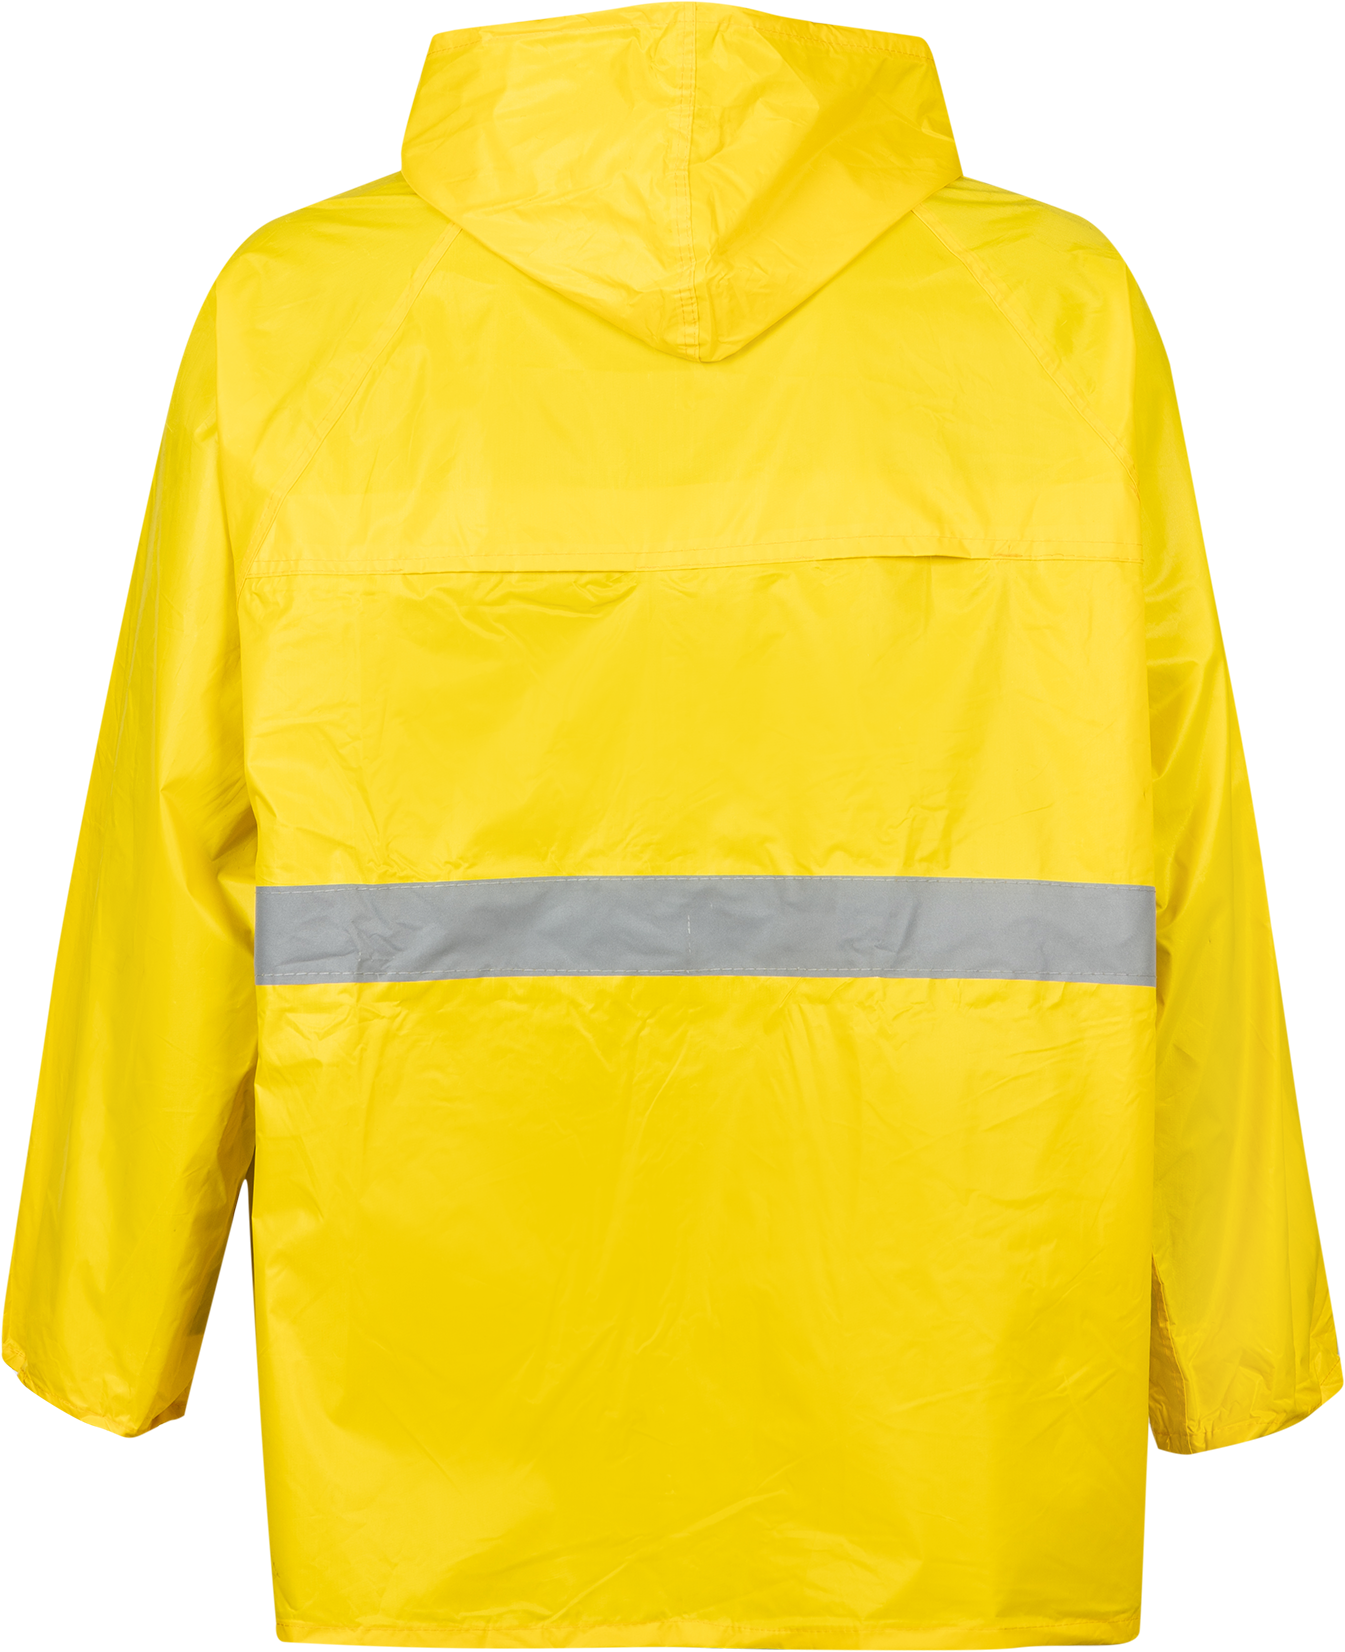 PIONEER Reflective Rain Suit - Yellow